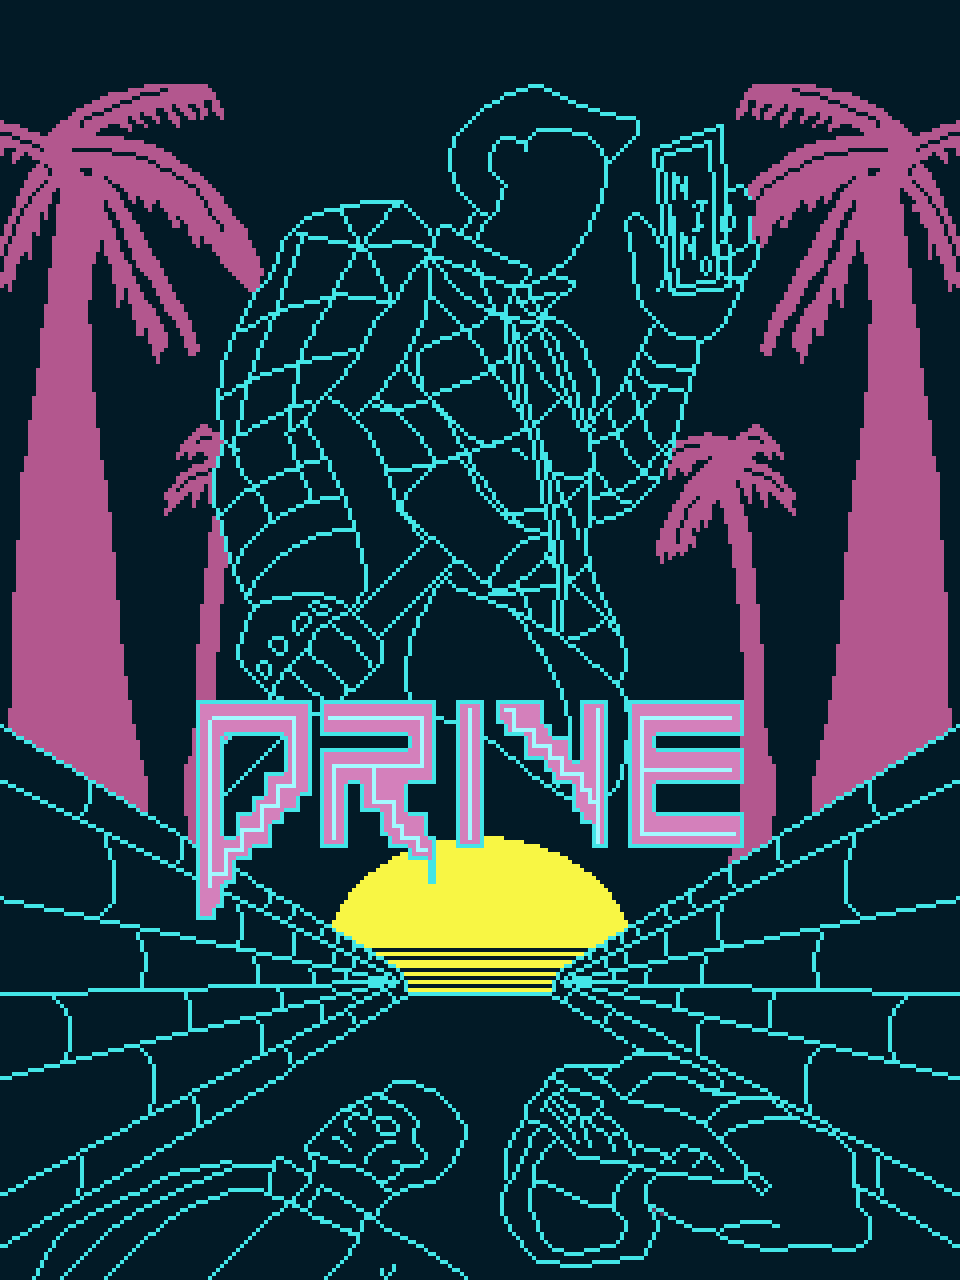 Fanart poster on Drive (film)